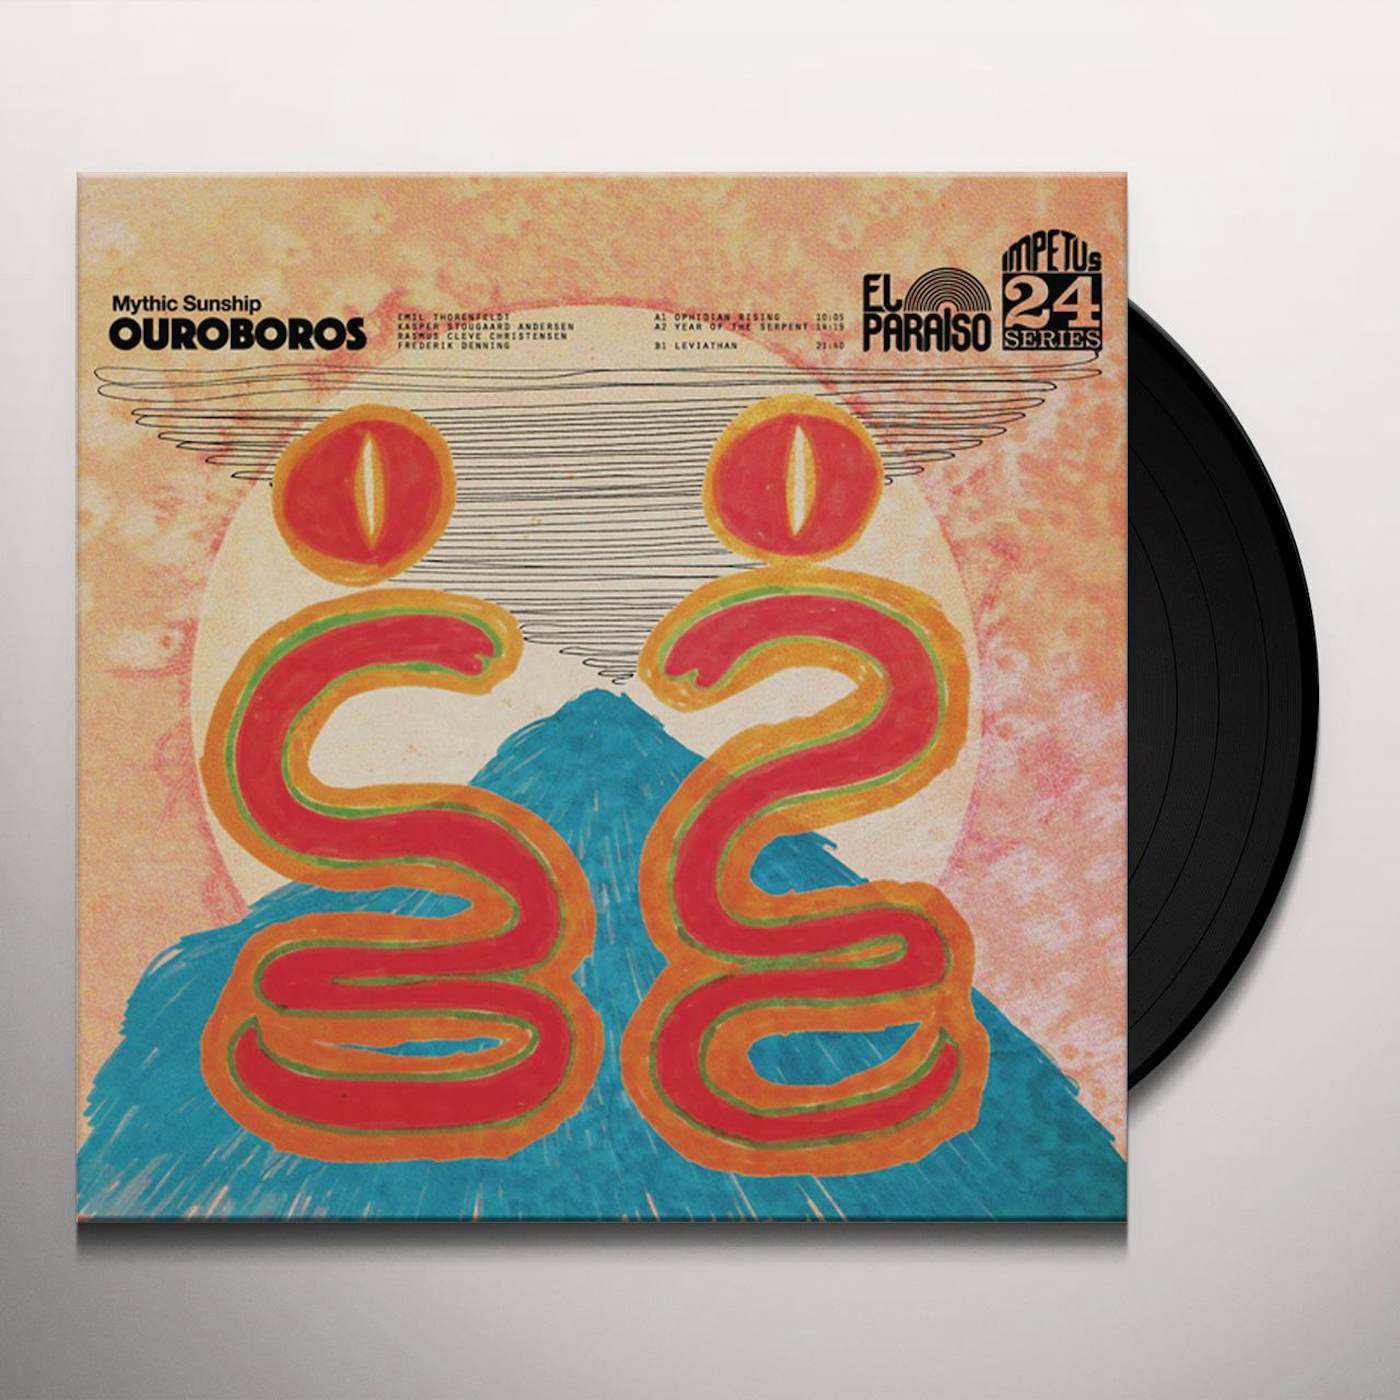 Mythic Sunship Ouroboros Vinyl Record